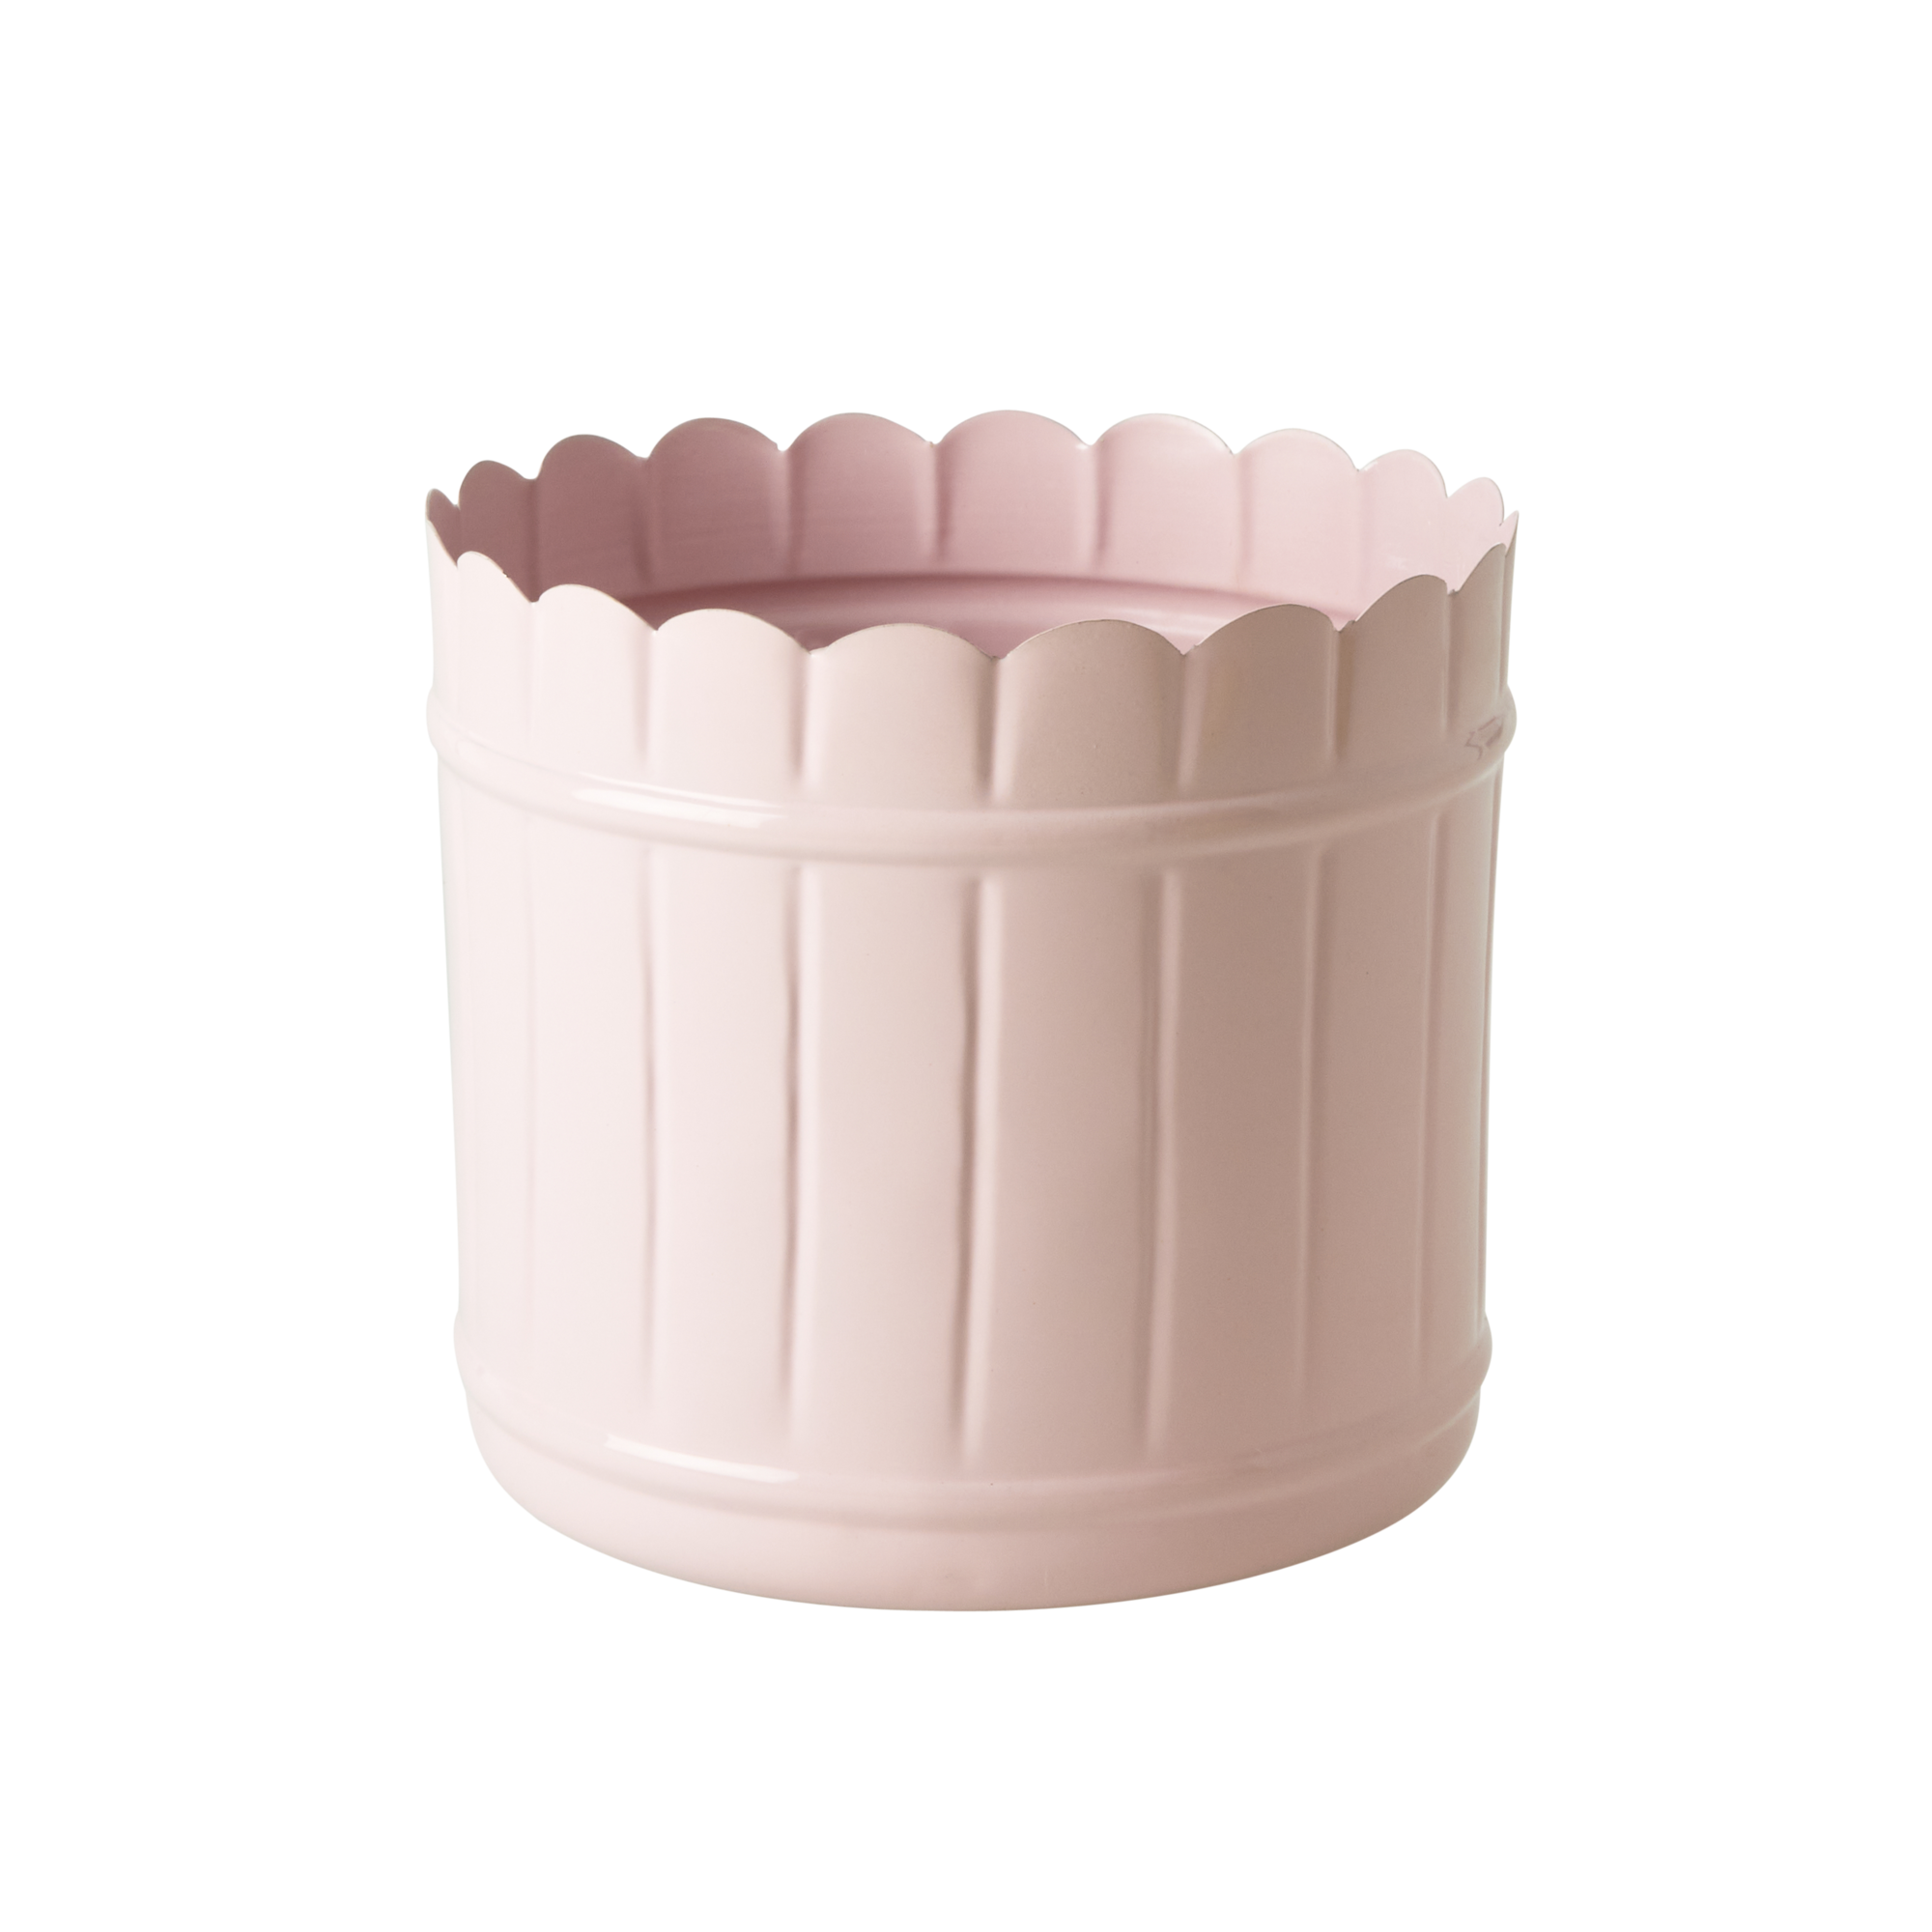 Rice - Metal Flower Pots - Large Pink